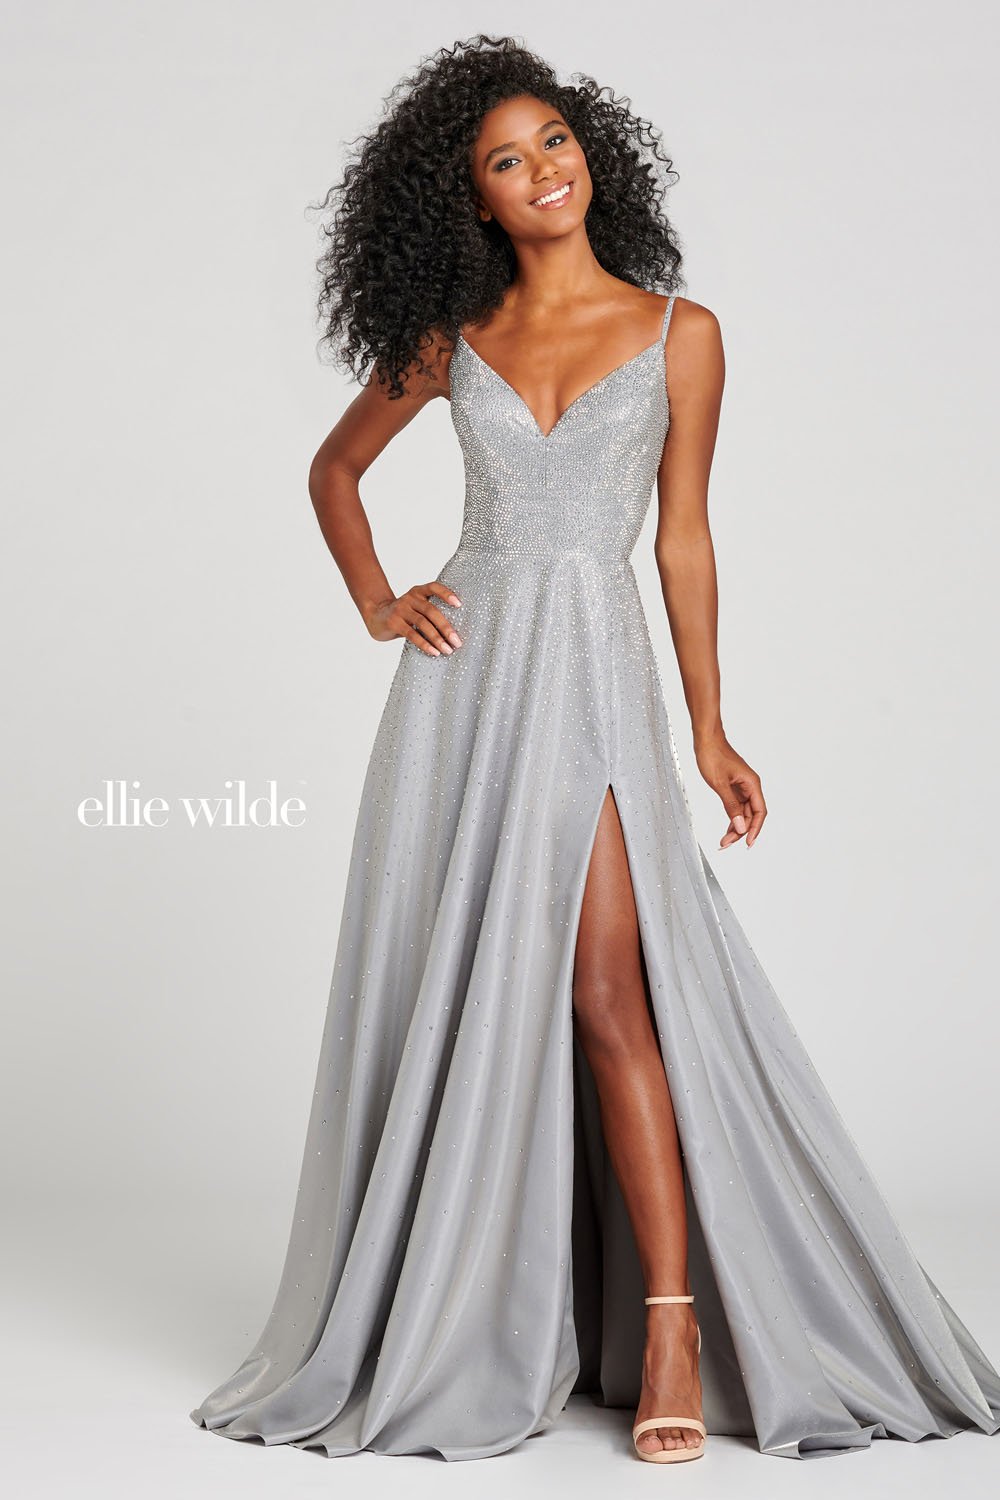 Ellie Wilde EW121001 dress images in these colors: Silver, Black, Ruby, Pink Lemonade, Sapphire.